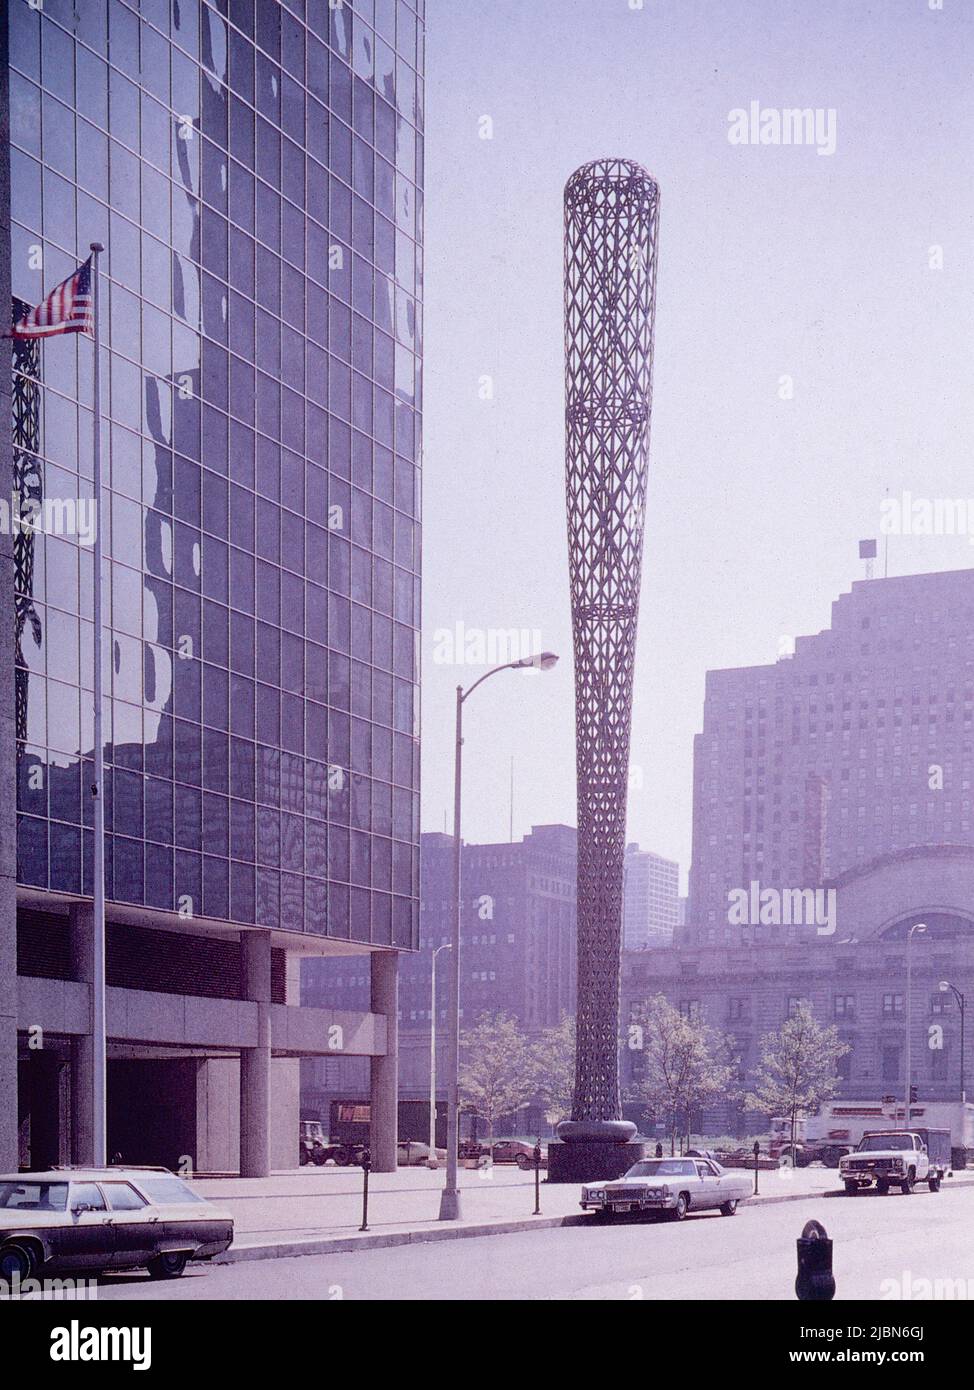 Batcolumn, sculpture artwork by Swedish-American artist Claes Oldenburg, Chicago 1977 Stock Photo